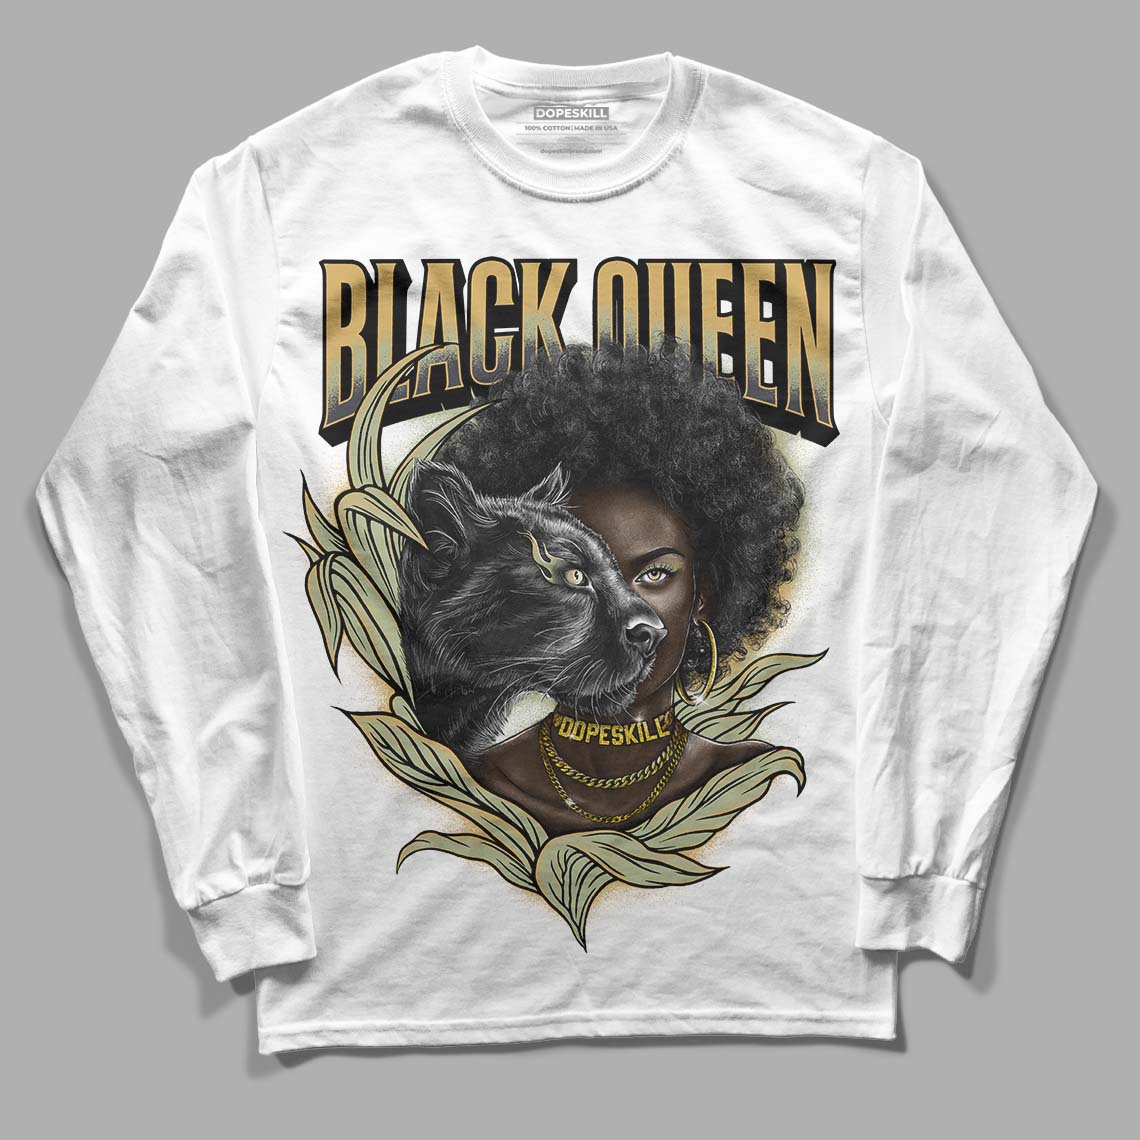 Jade Horizon 5s DopeSkill Long Sleeve T-Shirt New Black Queen Graphic - White 